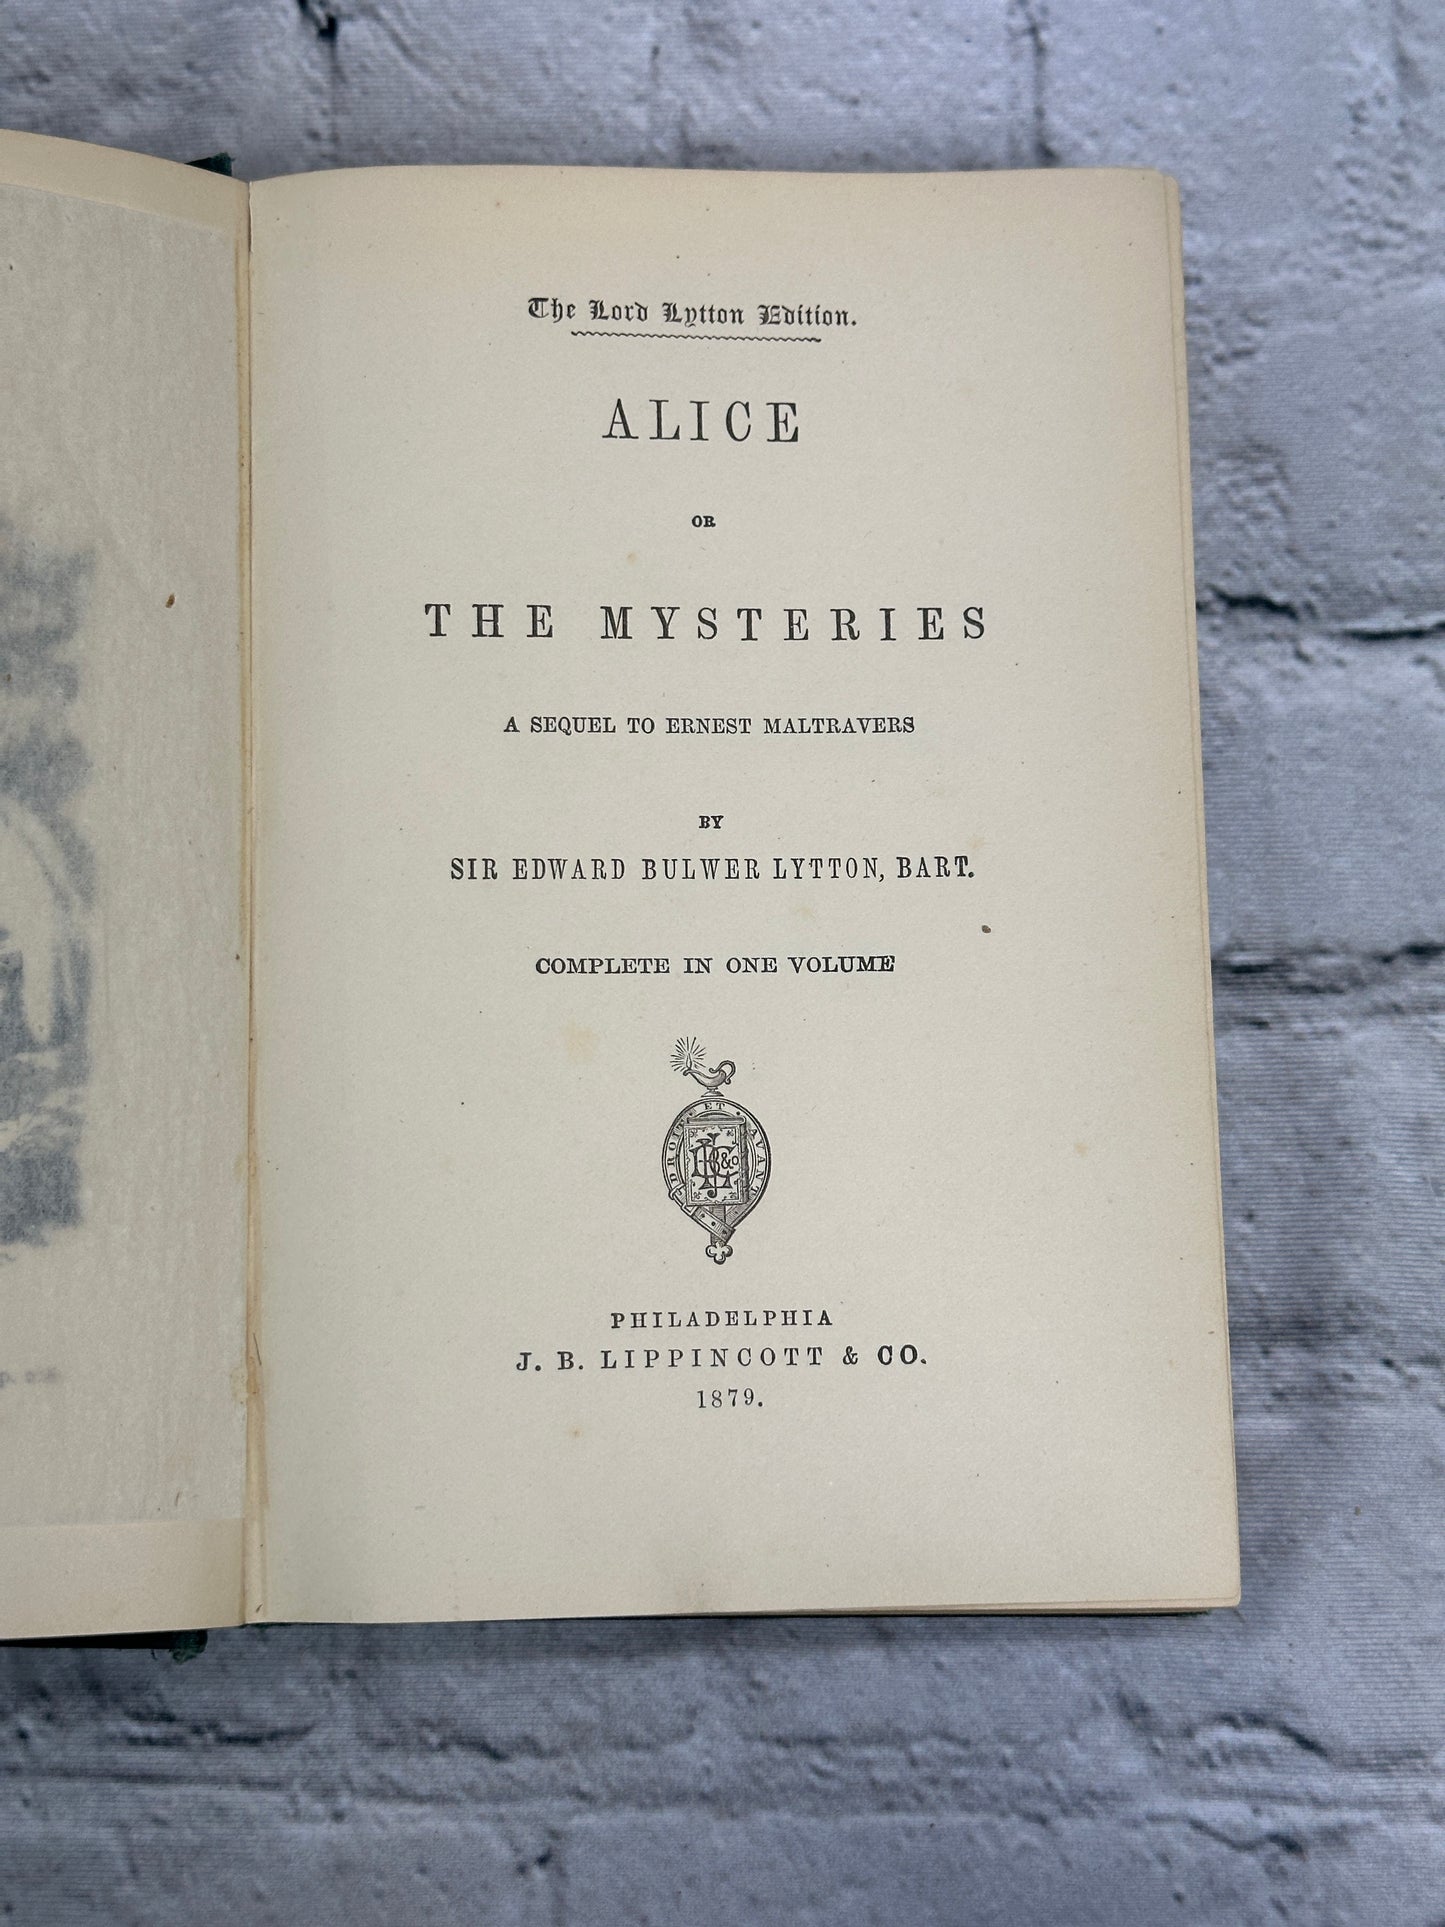 Alice or the Mysteries by Sir Edward Bulwer Lytton [1879]